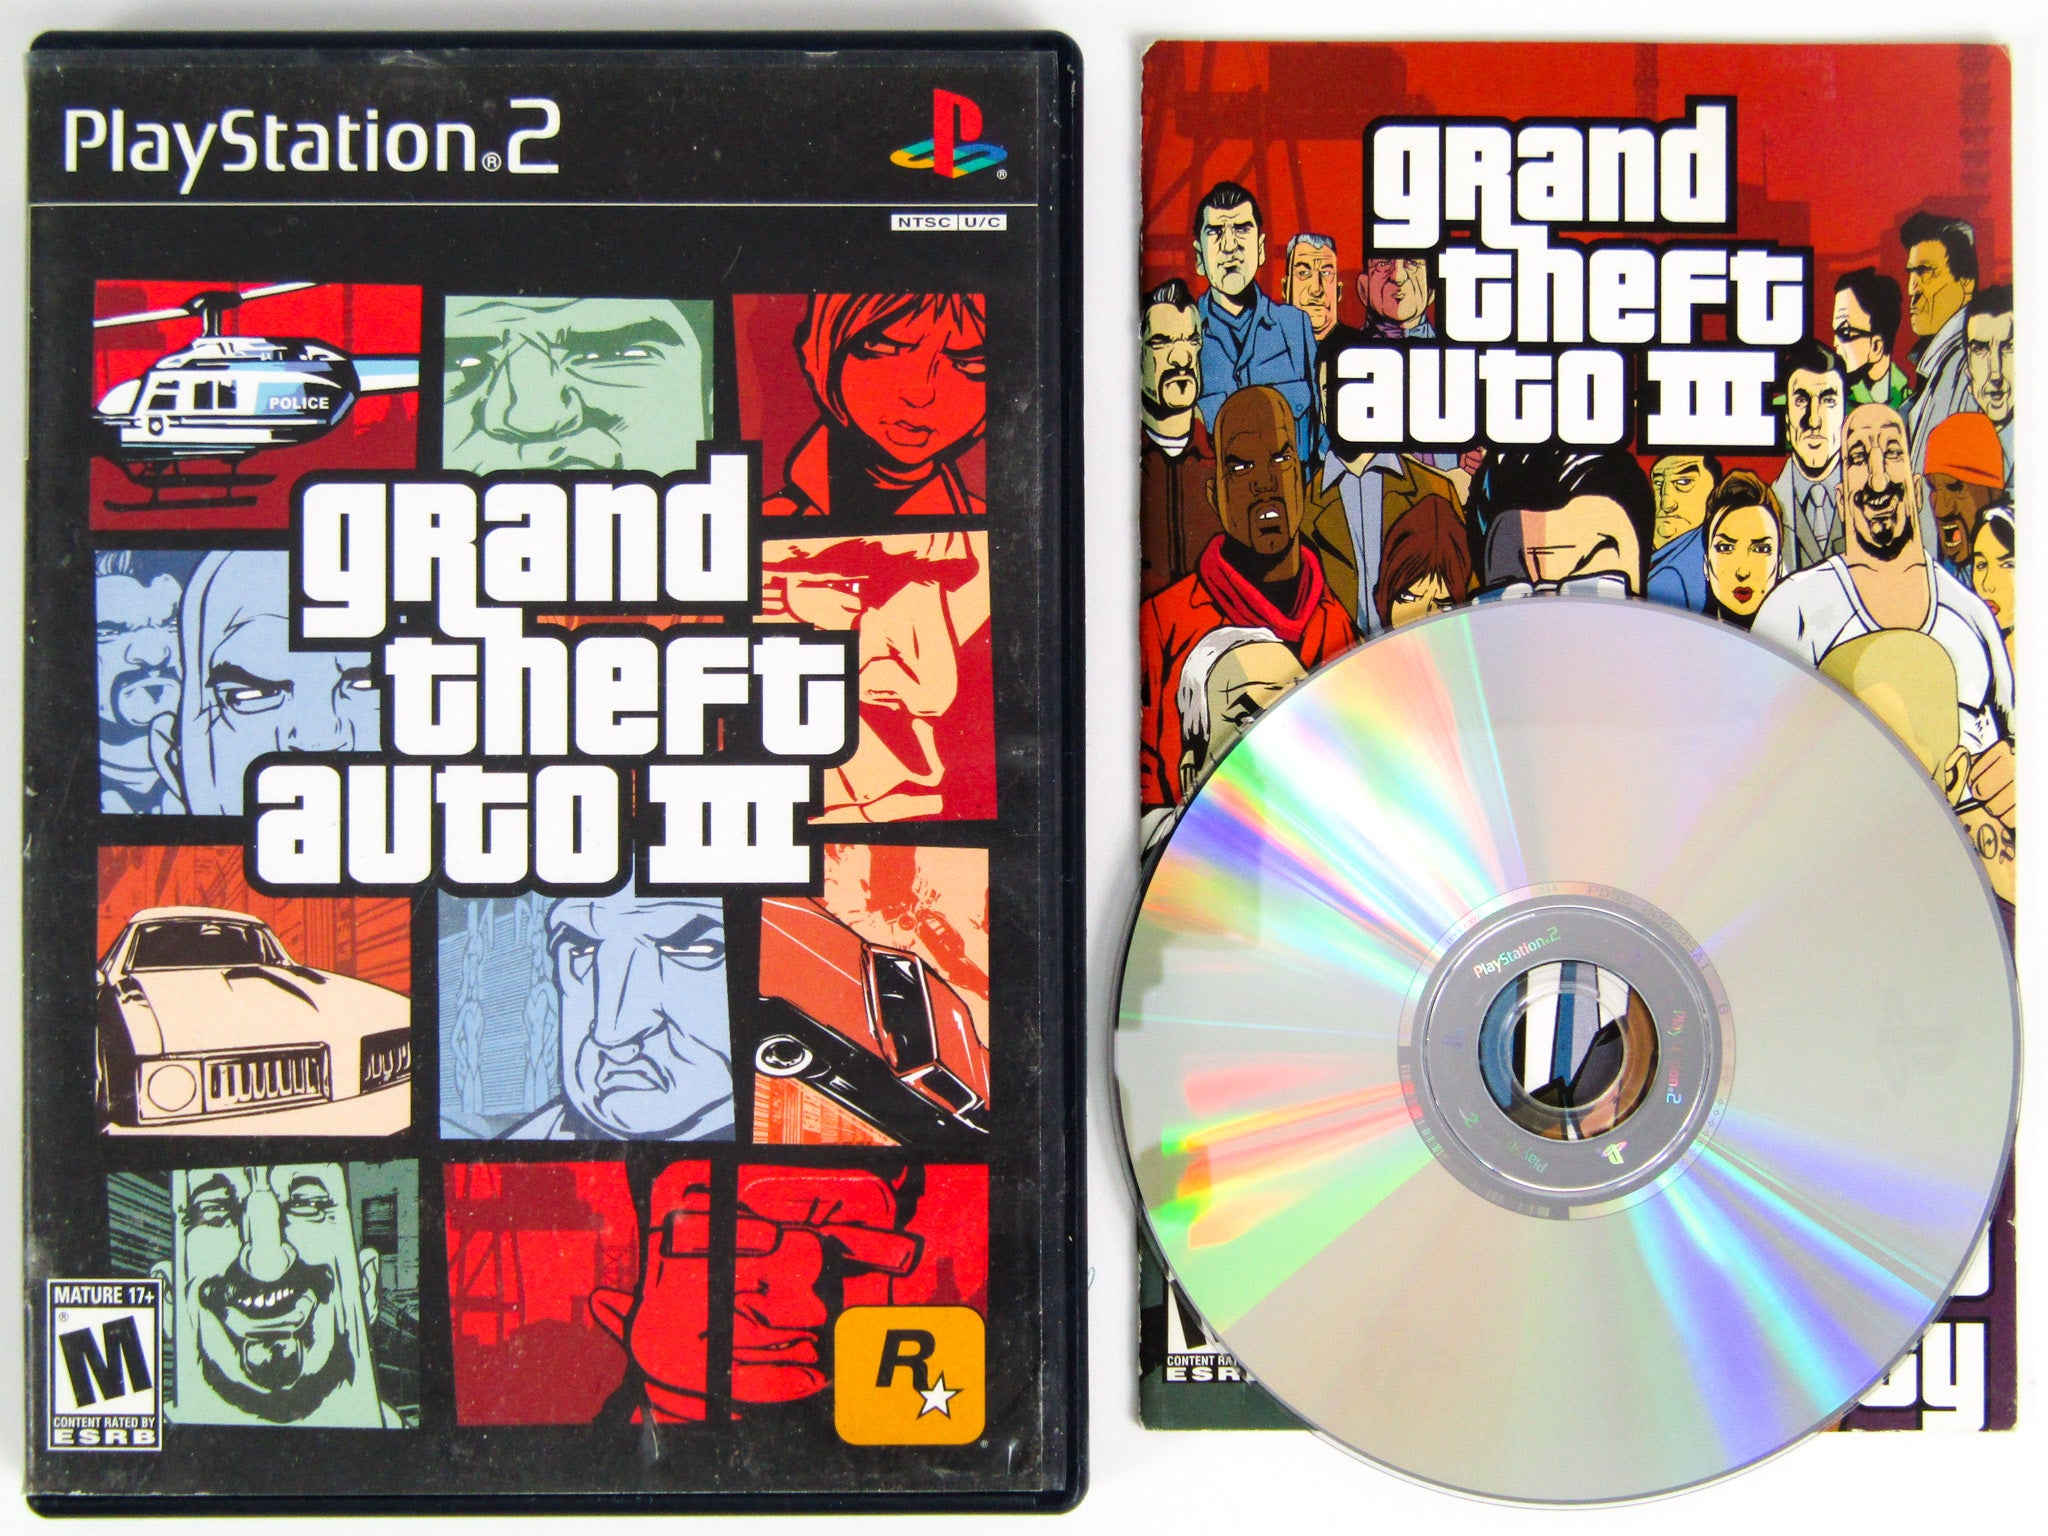 Grand Theft Auto III (PS2) 